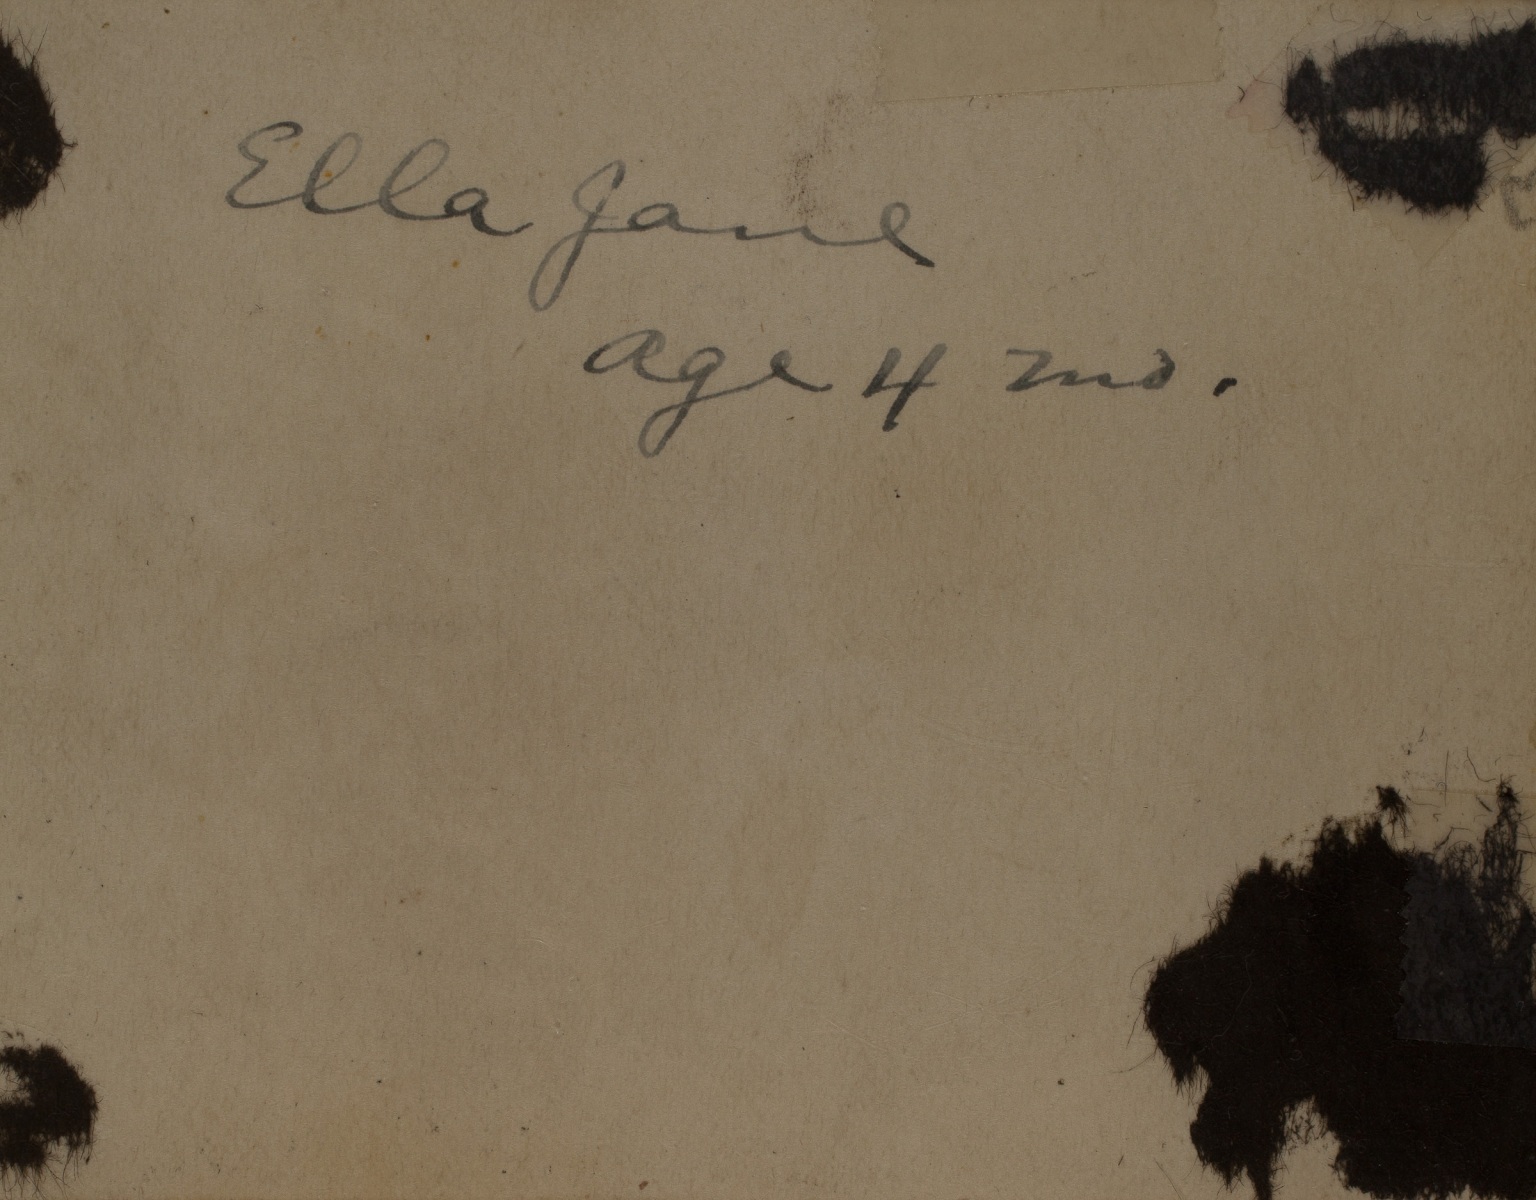 1919  back of photo of Ella Jane held by Ellenor Bonney  "Ella Jane age 4 mo."